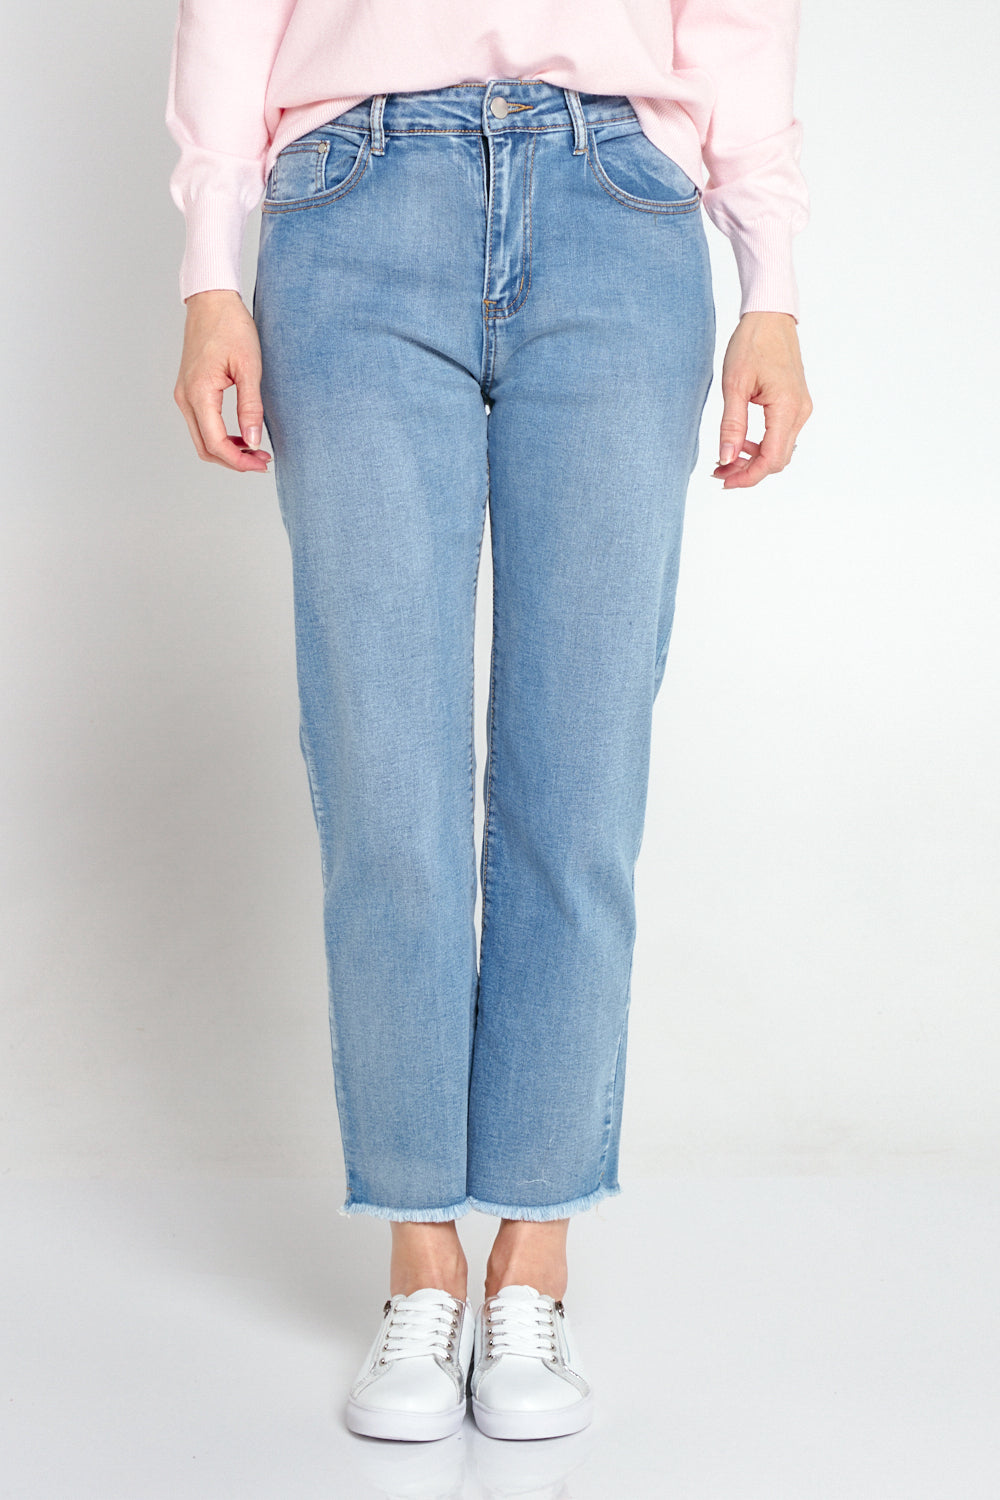 Tegan Cropped Jeans - Light Wash Denim